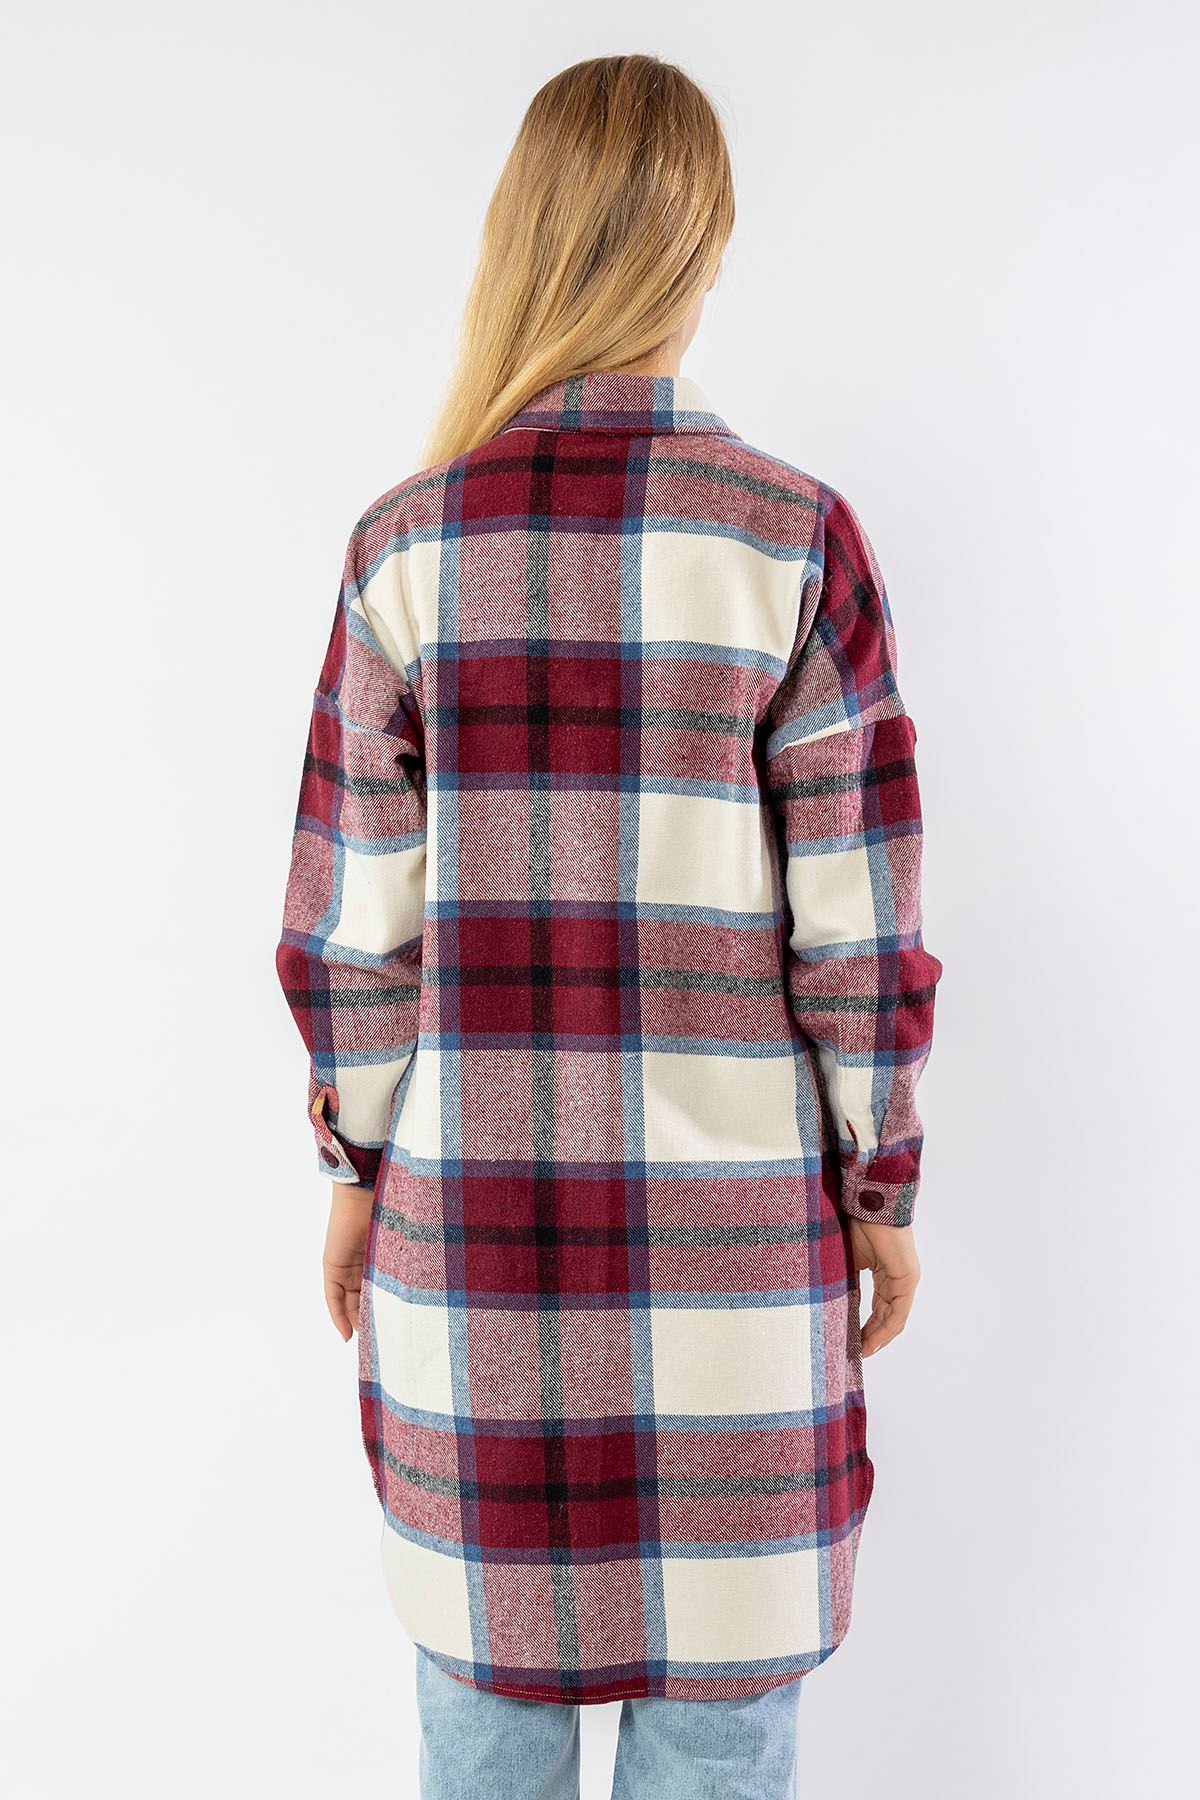 Lumberjack Fabric Long Sleeve Above Knee Oversize Plaid Women'S Shirt - Burgundy